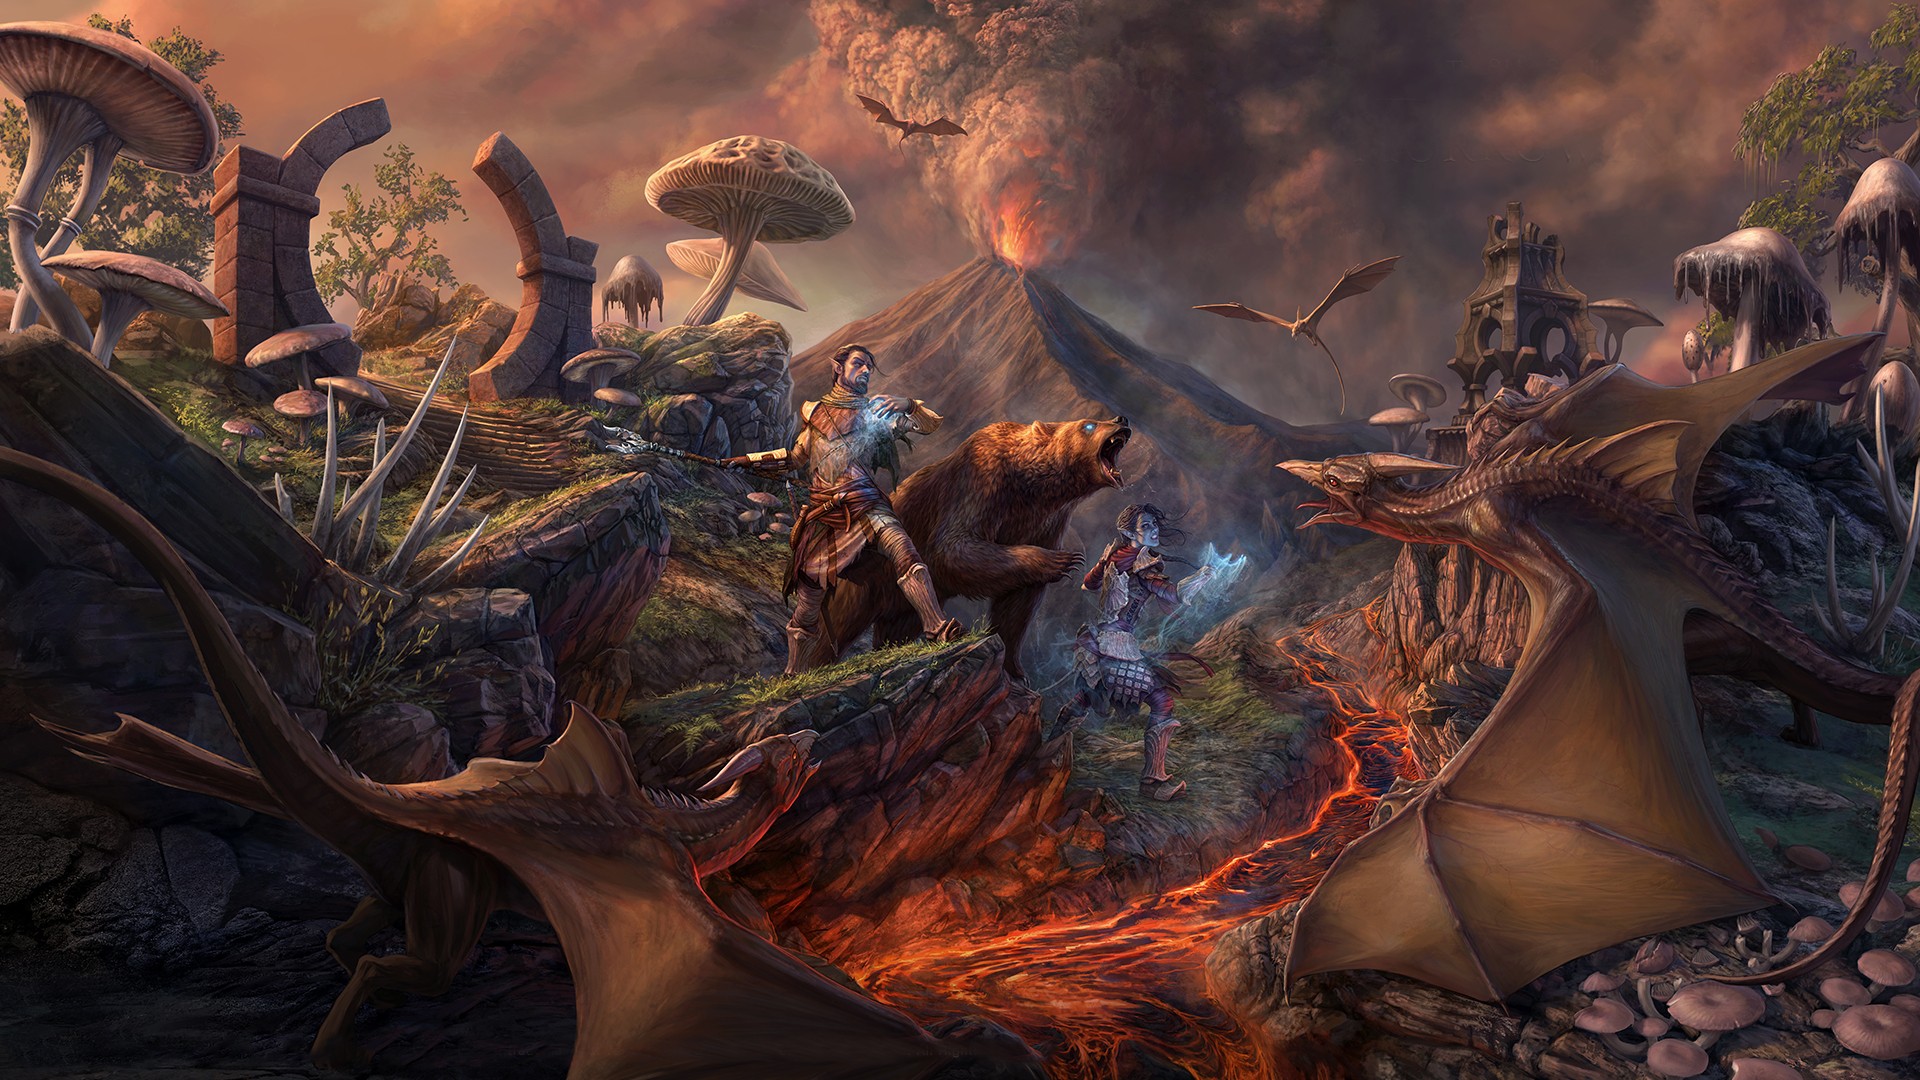 511963 The Elder Scrolls Online The Elder Scrolls III Morrowind Volcano Grizzly Bear Video Games Wyvern Cliffracer 